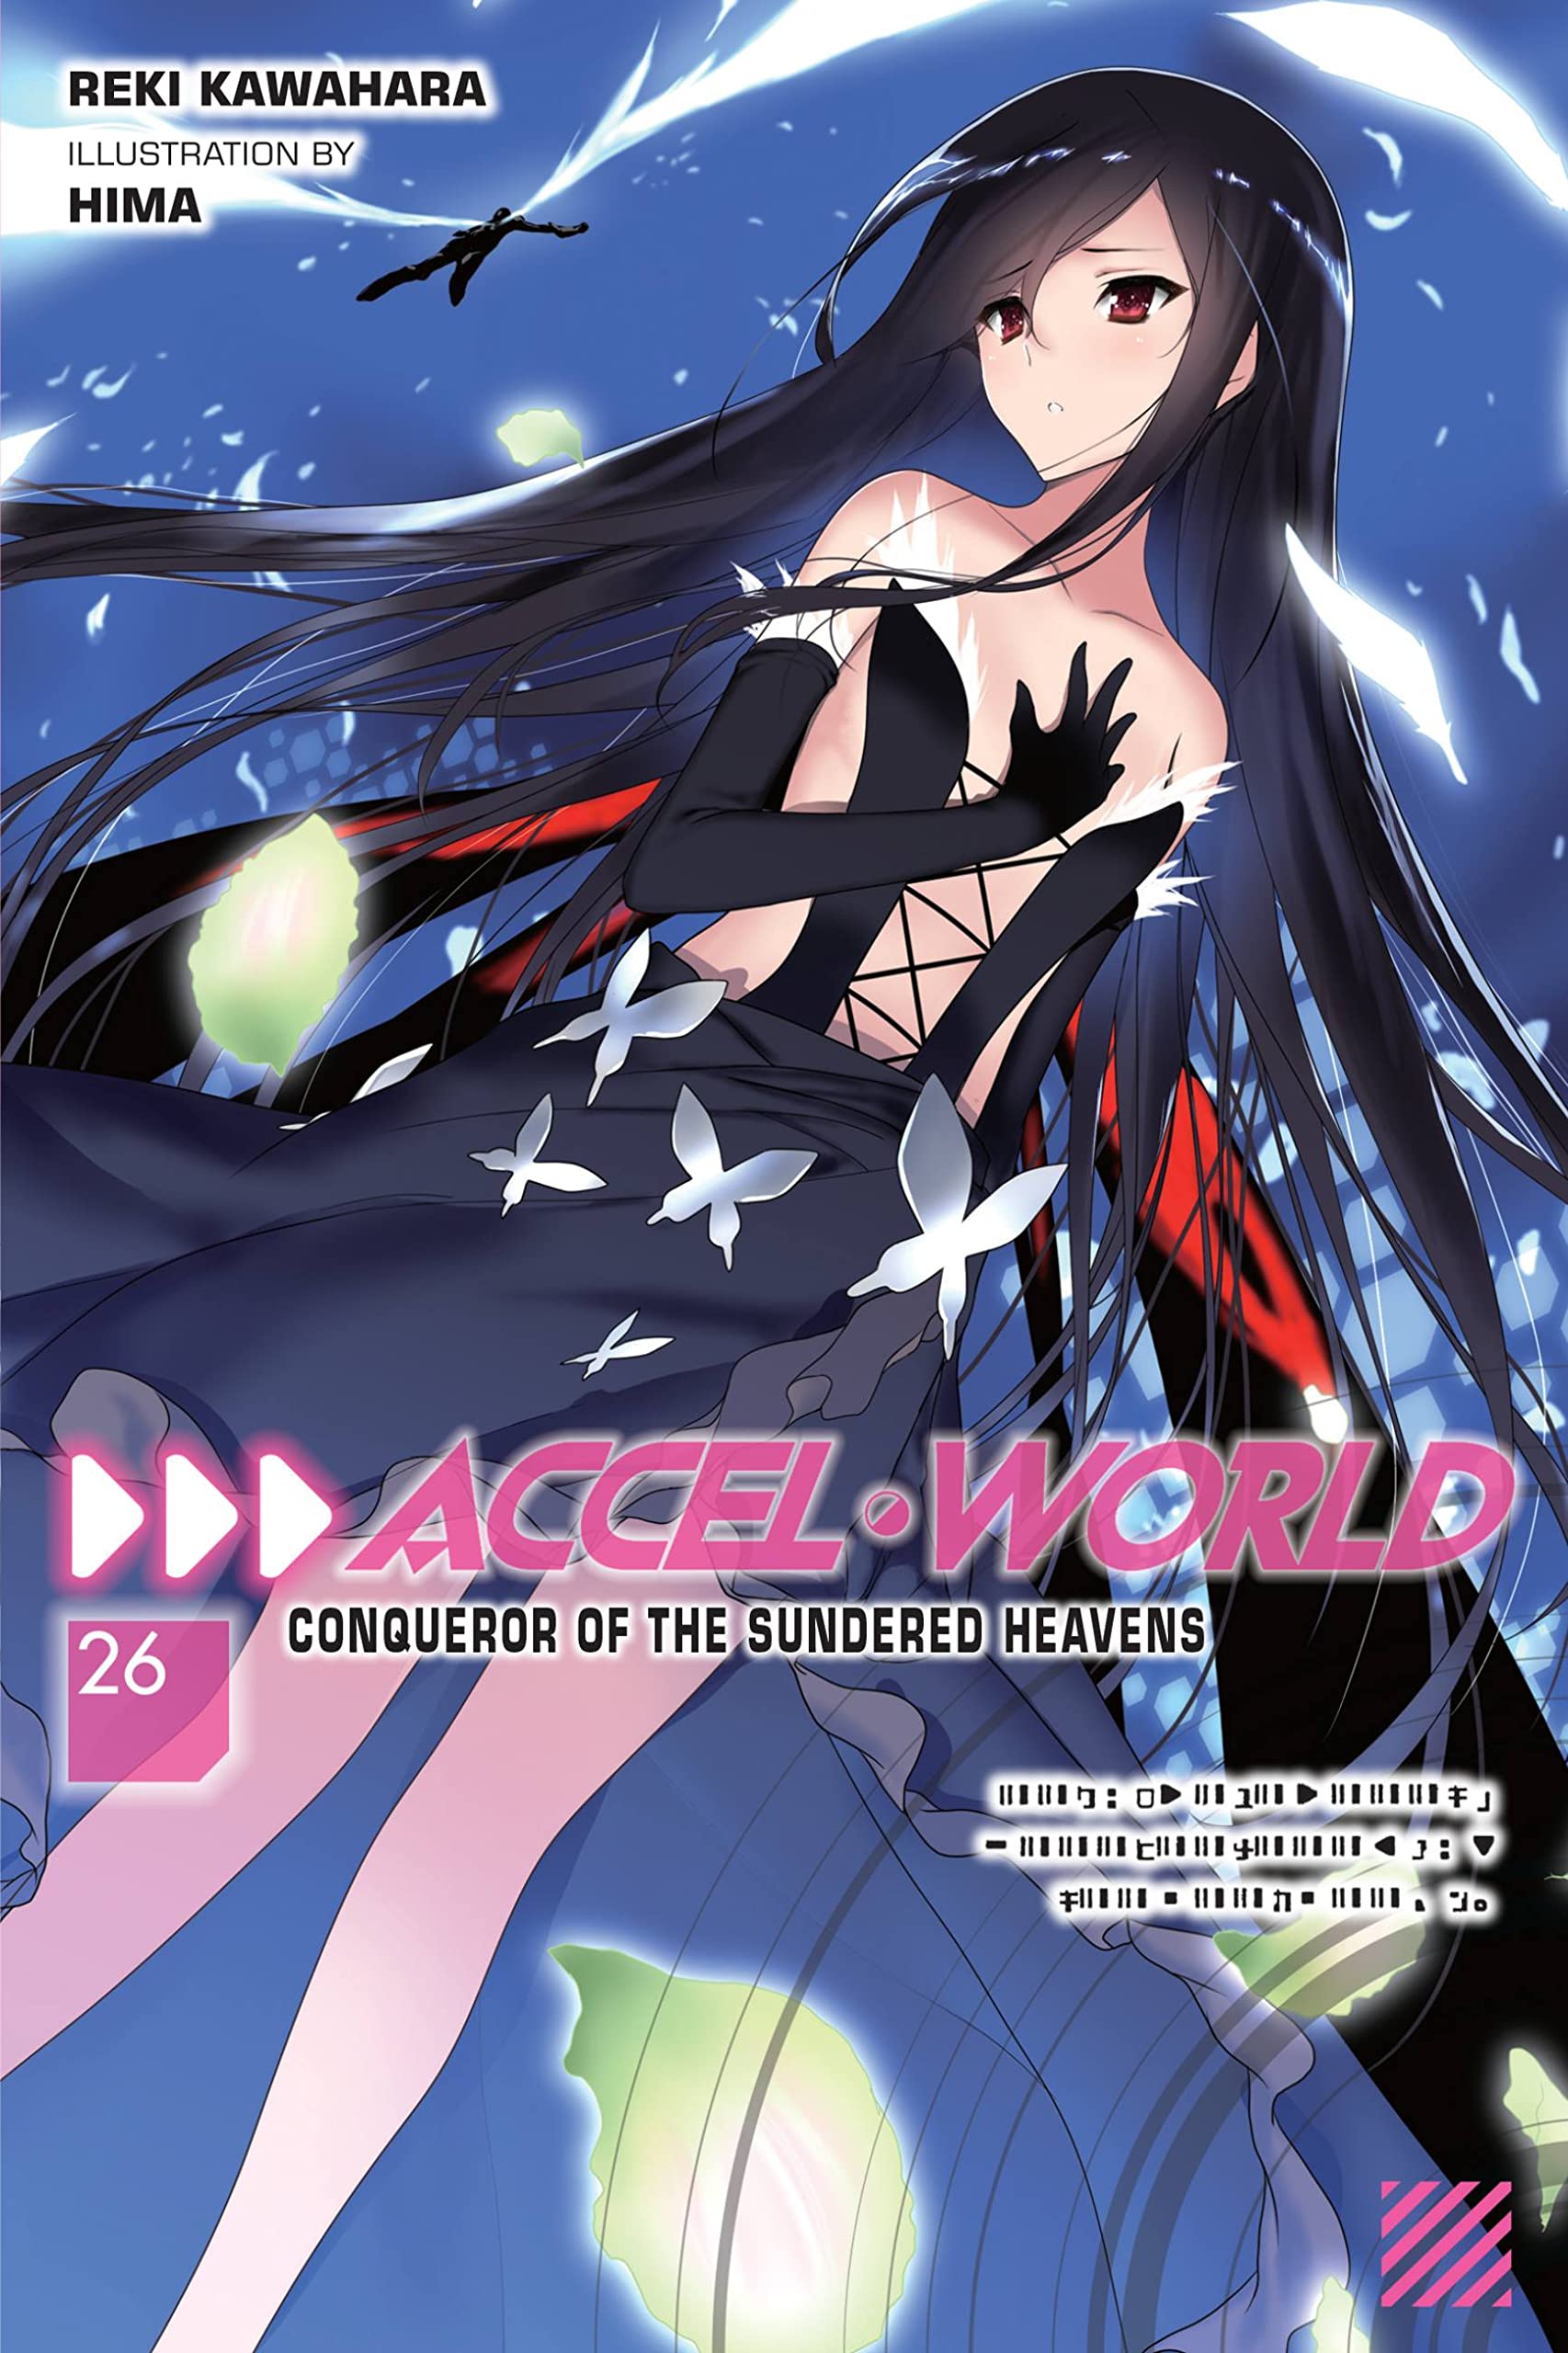 (22/08/2023) Accel World Vol. 26 (Light Novel): Conqueror of the Sundered Heavens